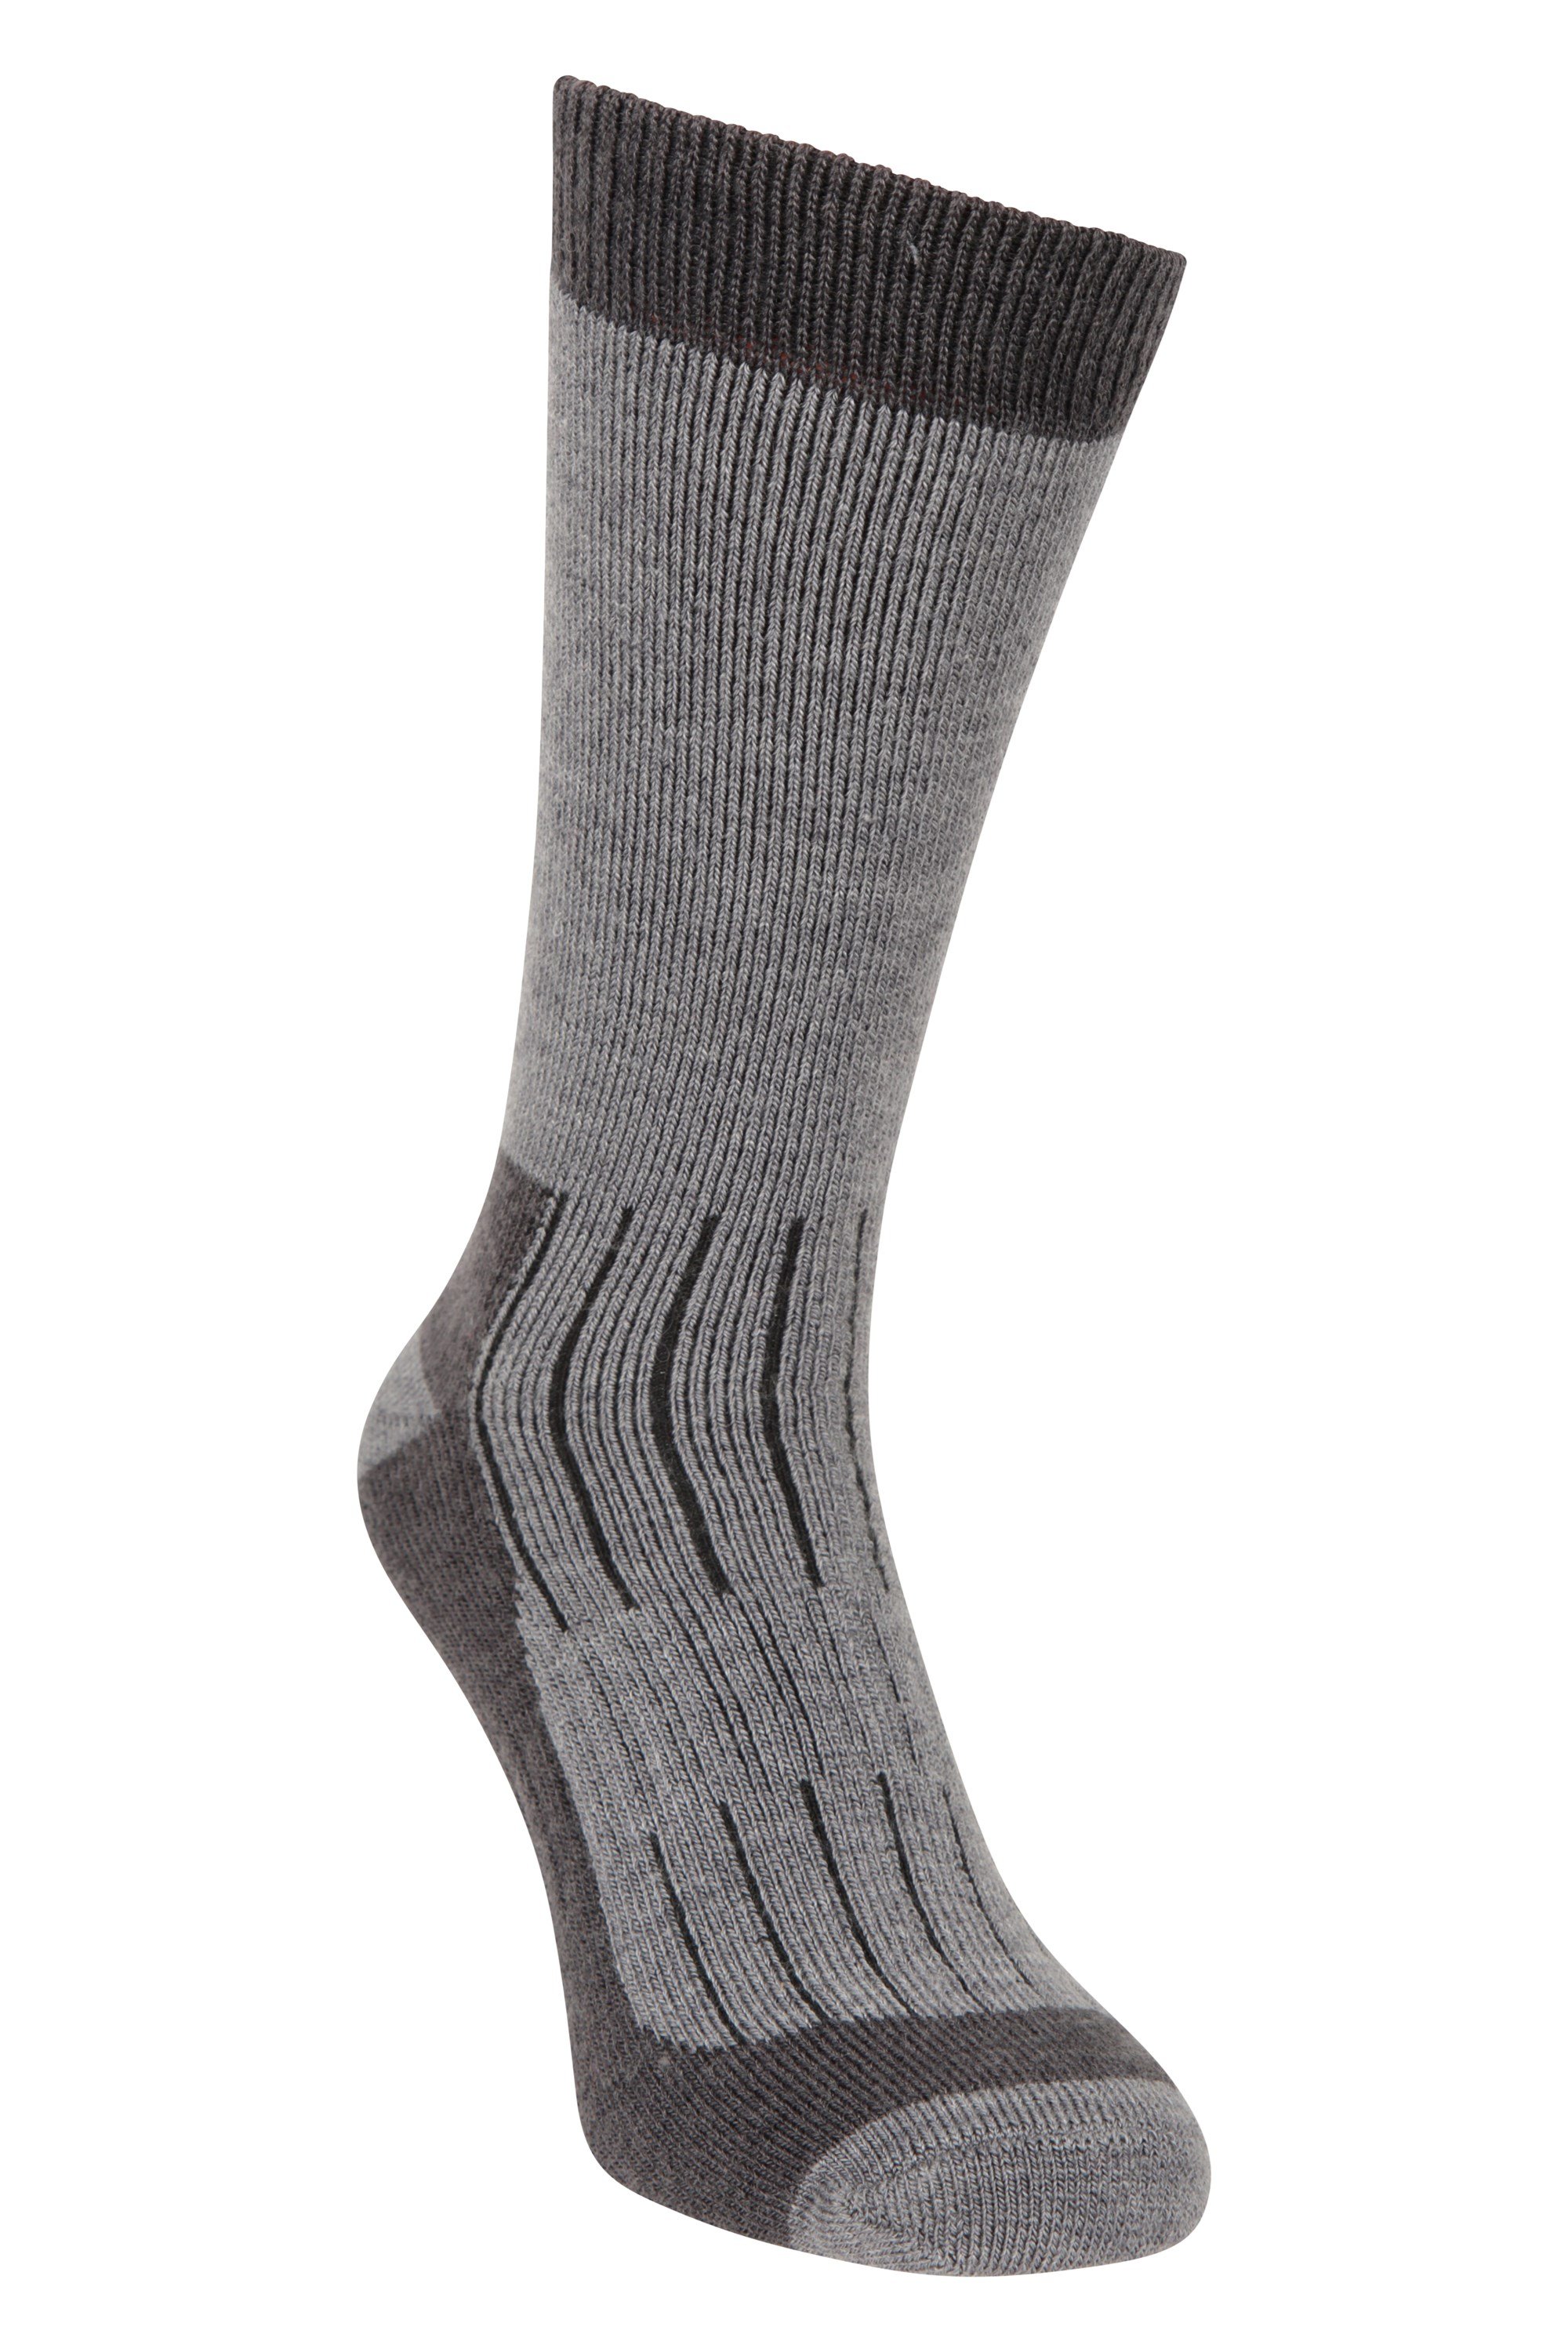 Explorer Mens Merino Thermal Socks - Grey